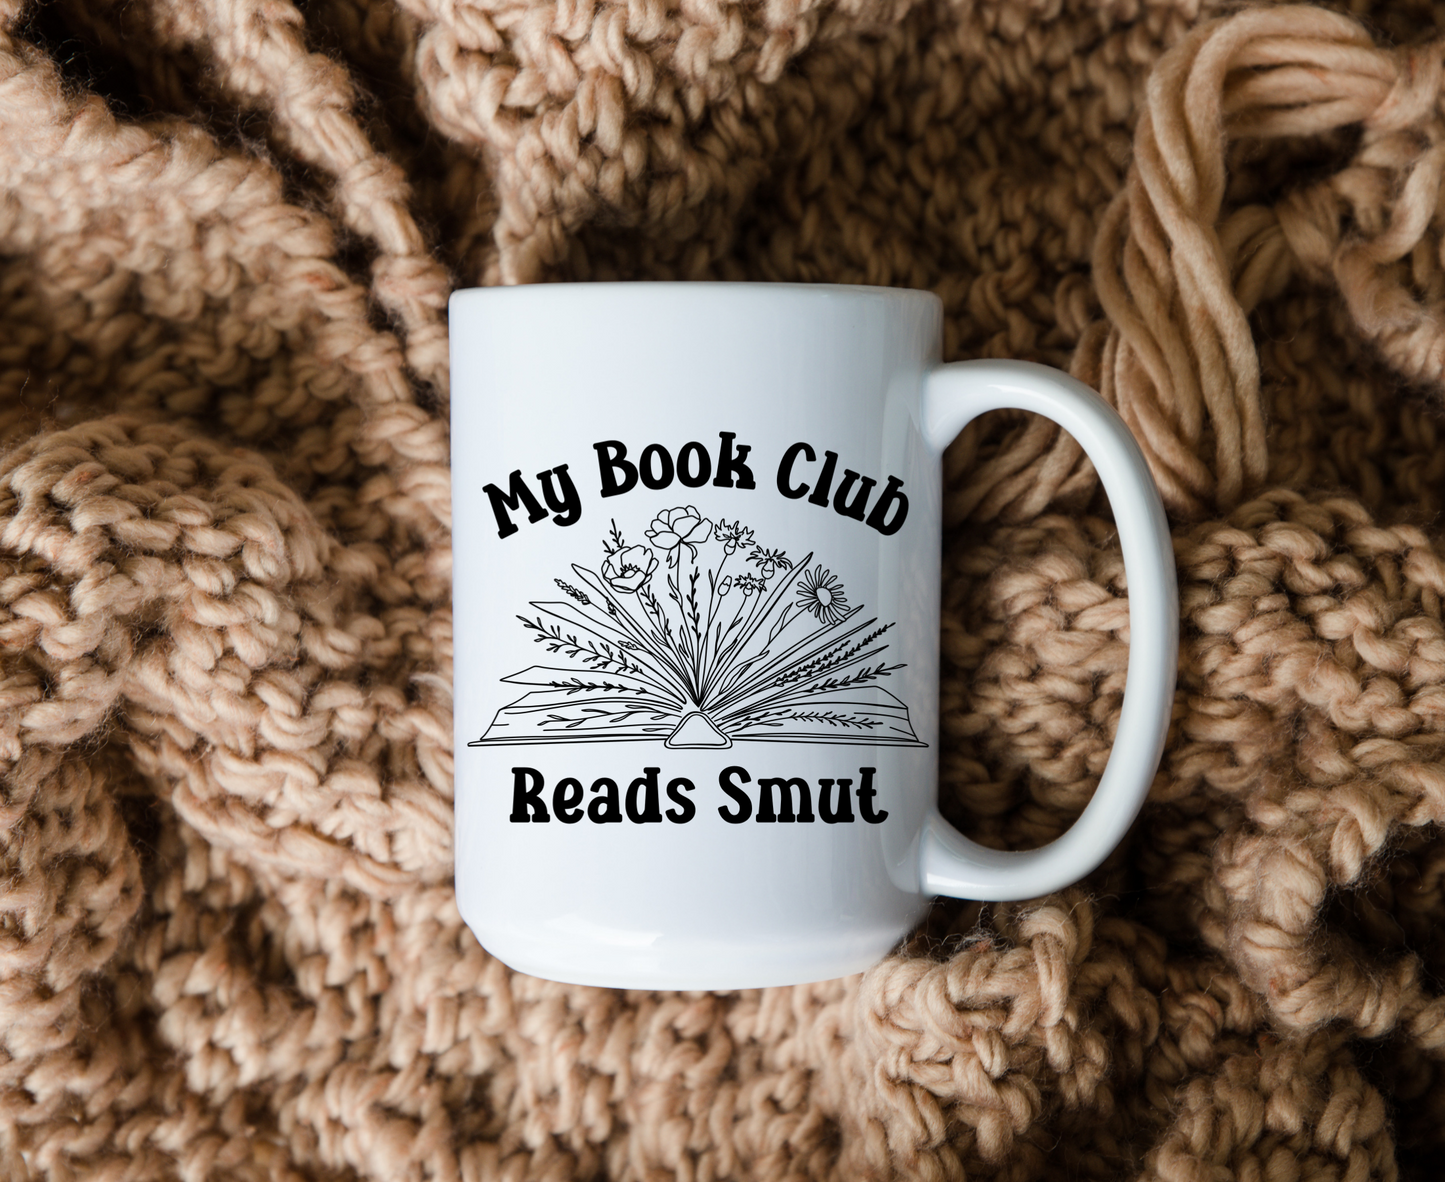 My Book Club Reads Smut Bookish Mug